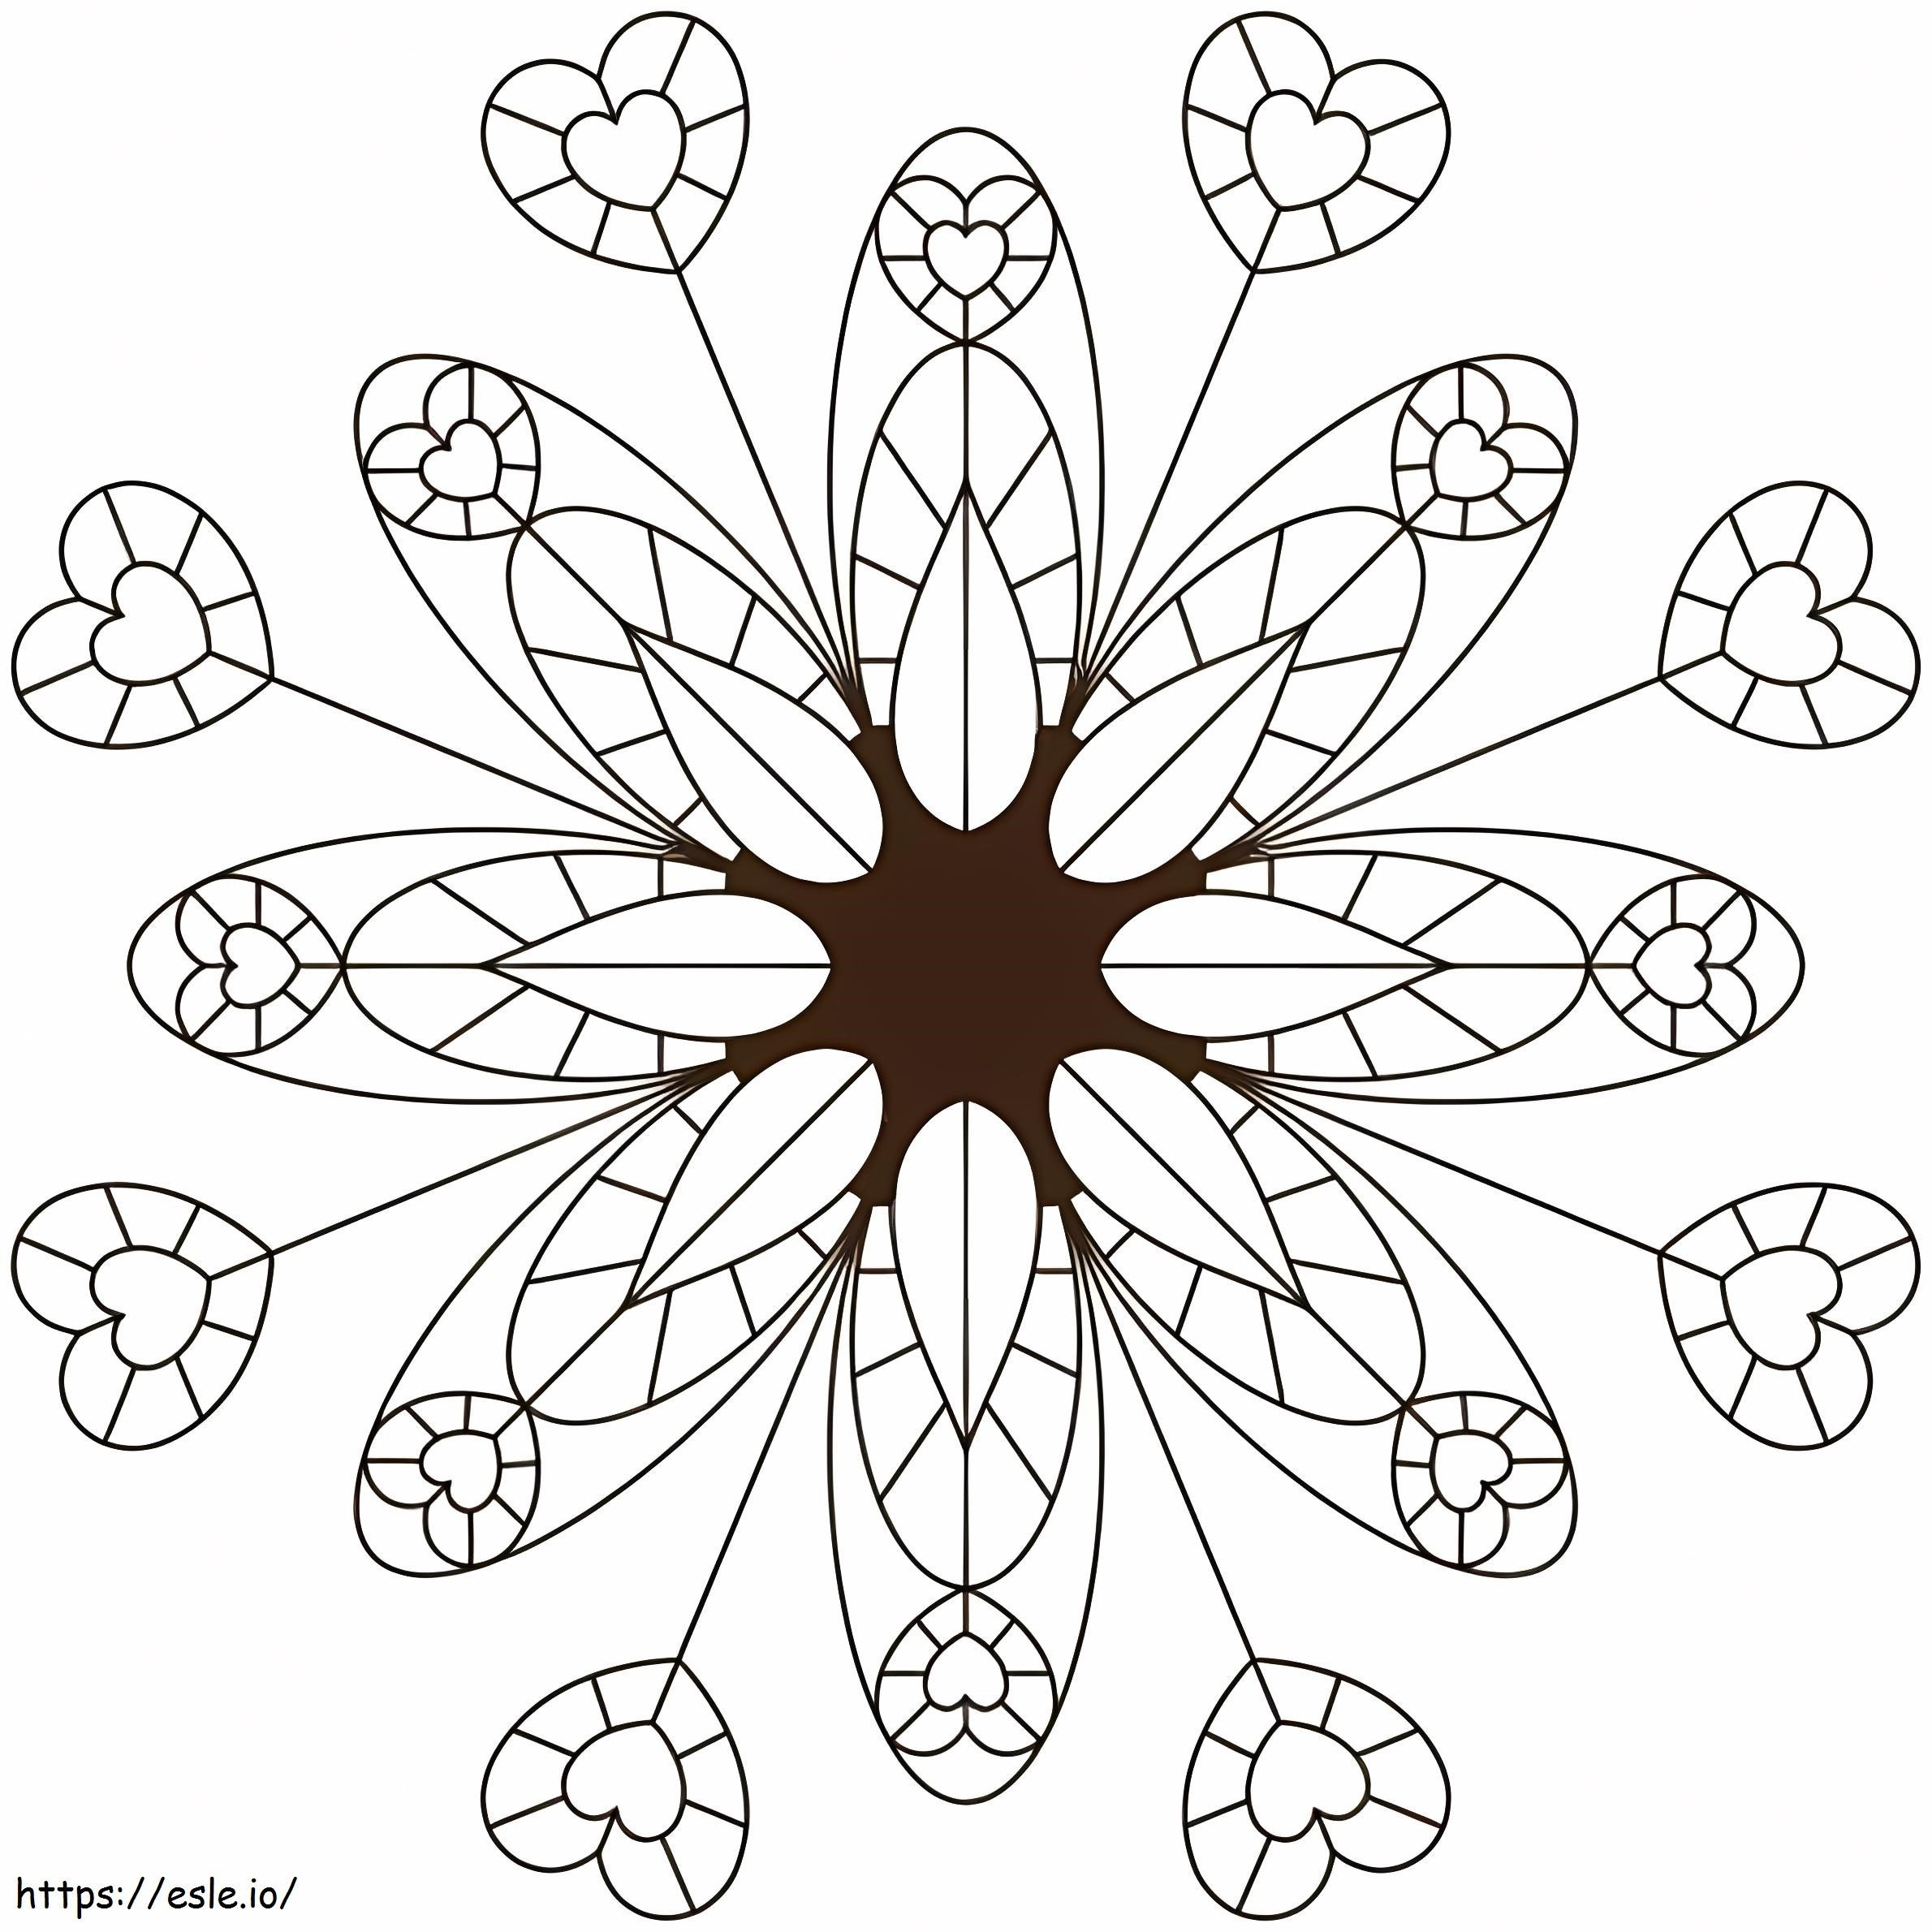 Mandala-Blumen ausmalbilder